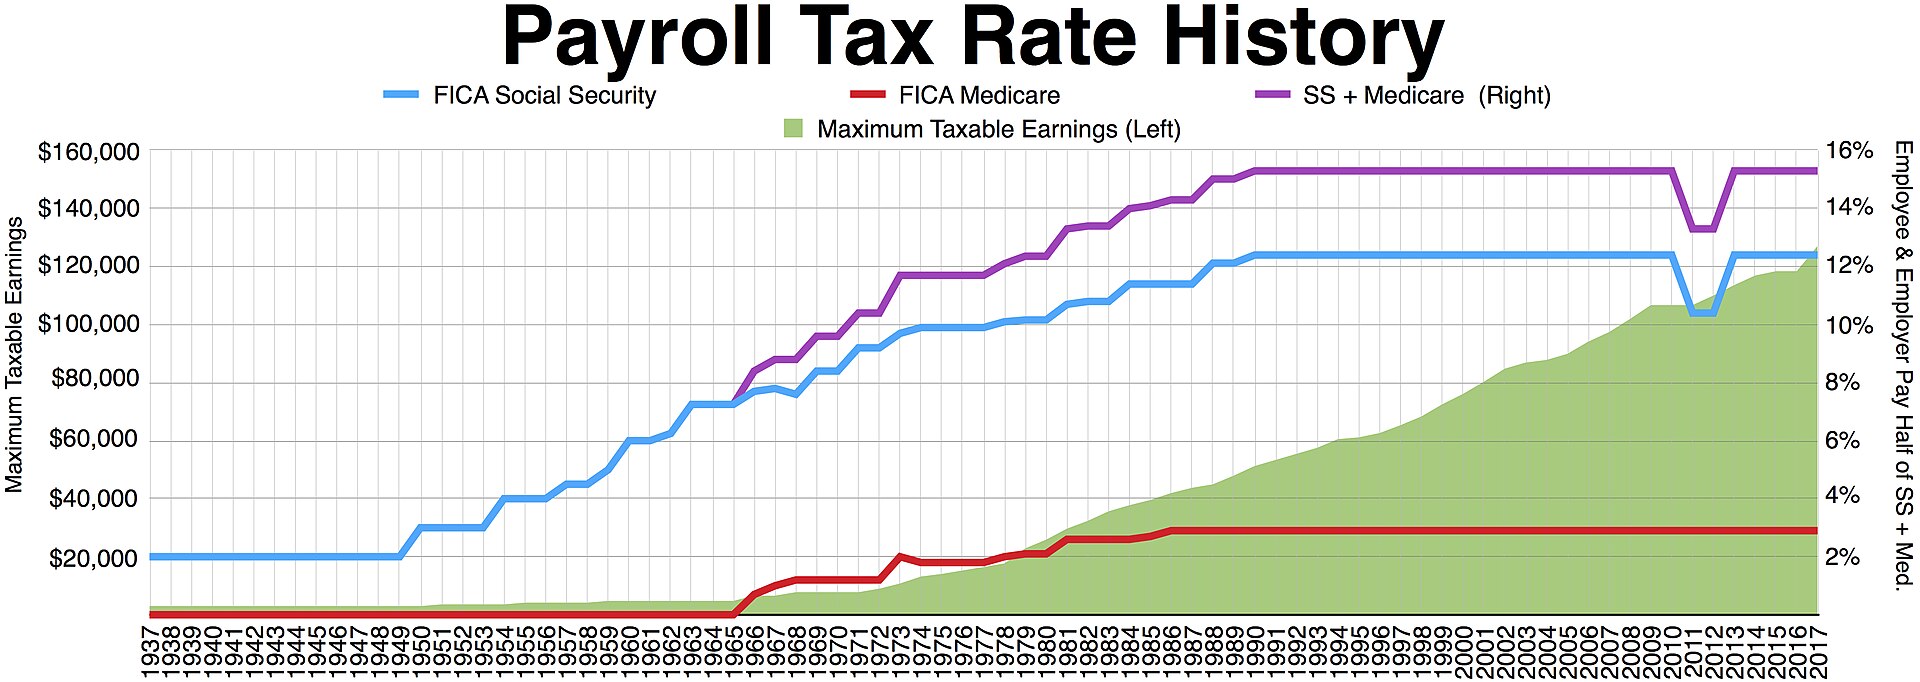 1920px-Payroll_tax_history.jpg